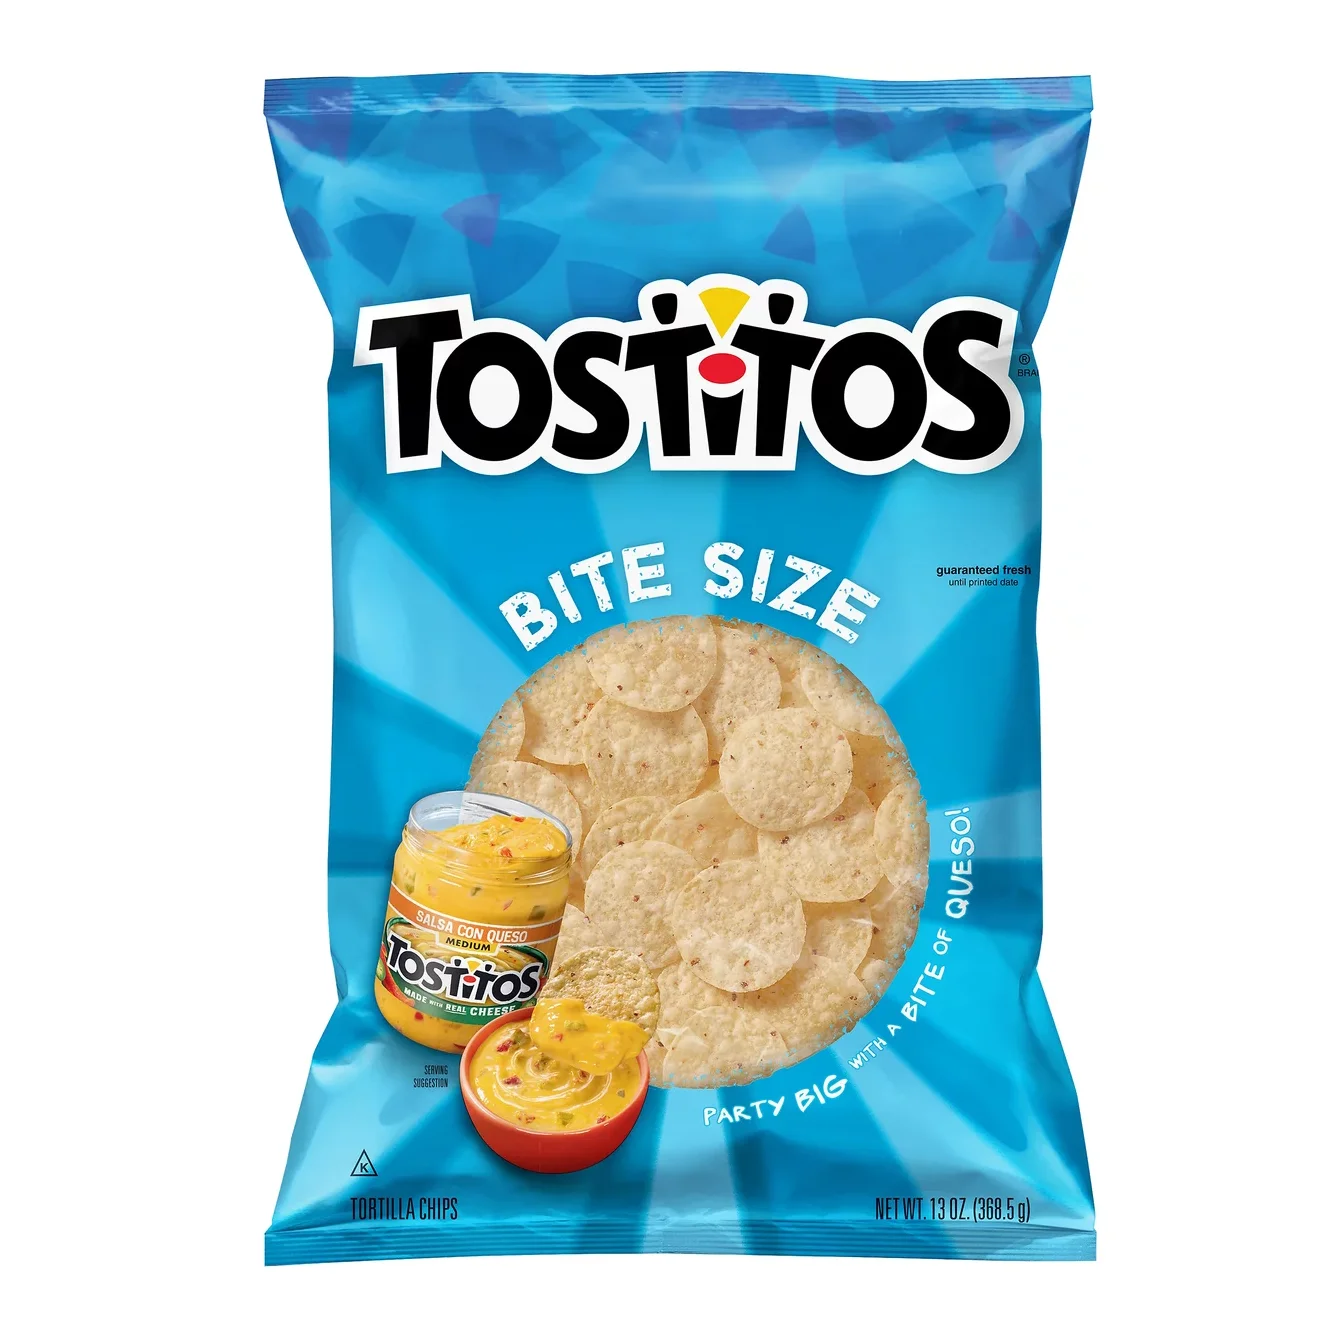 Tostitos Tortilla Chips Wholesale Supplier